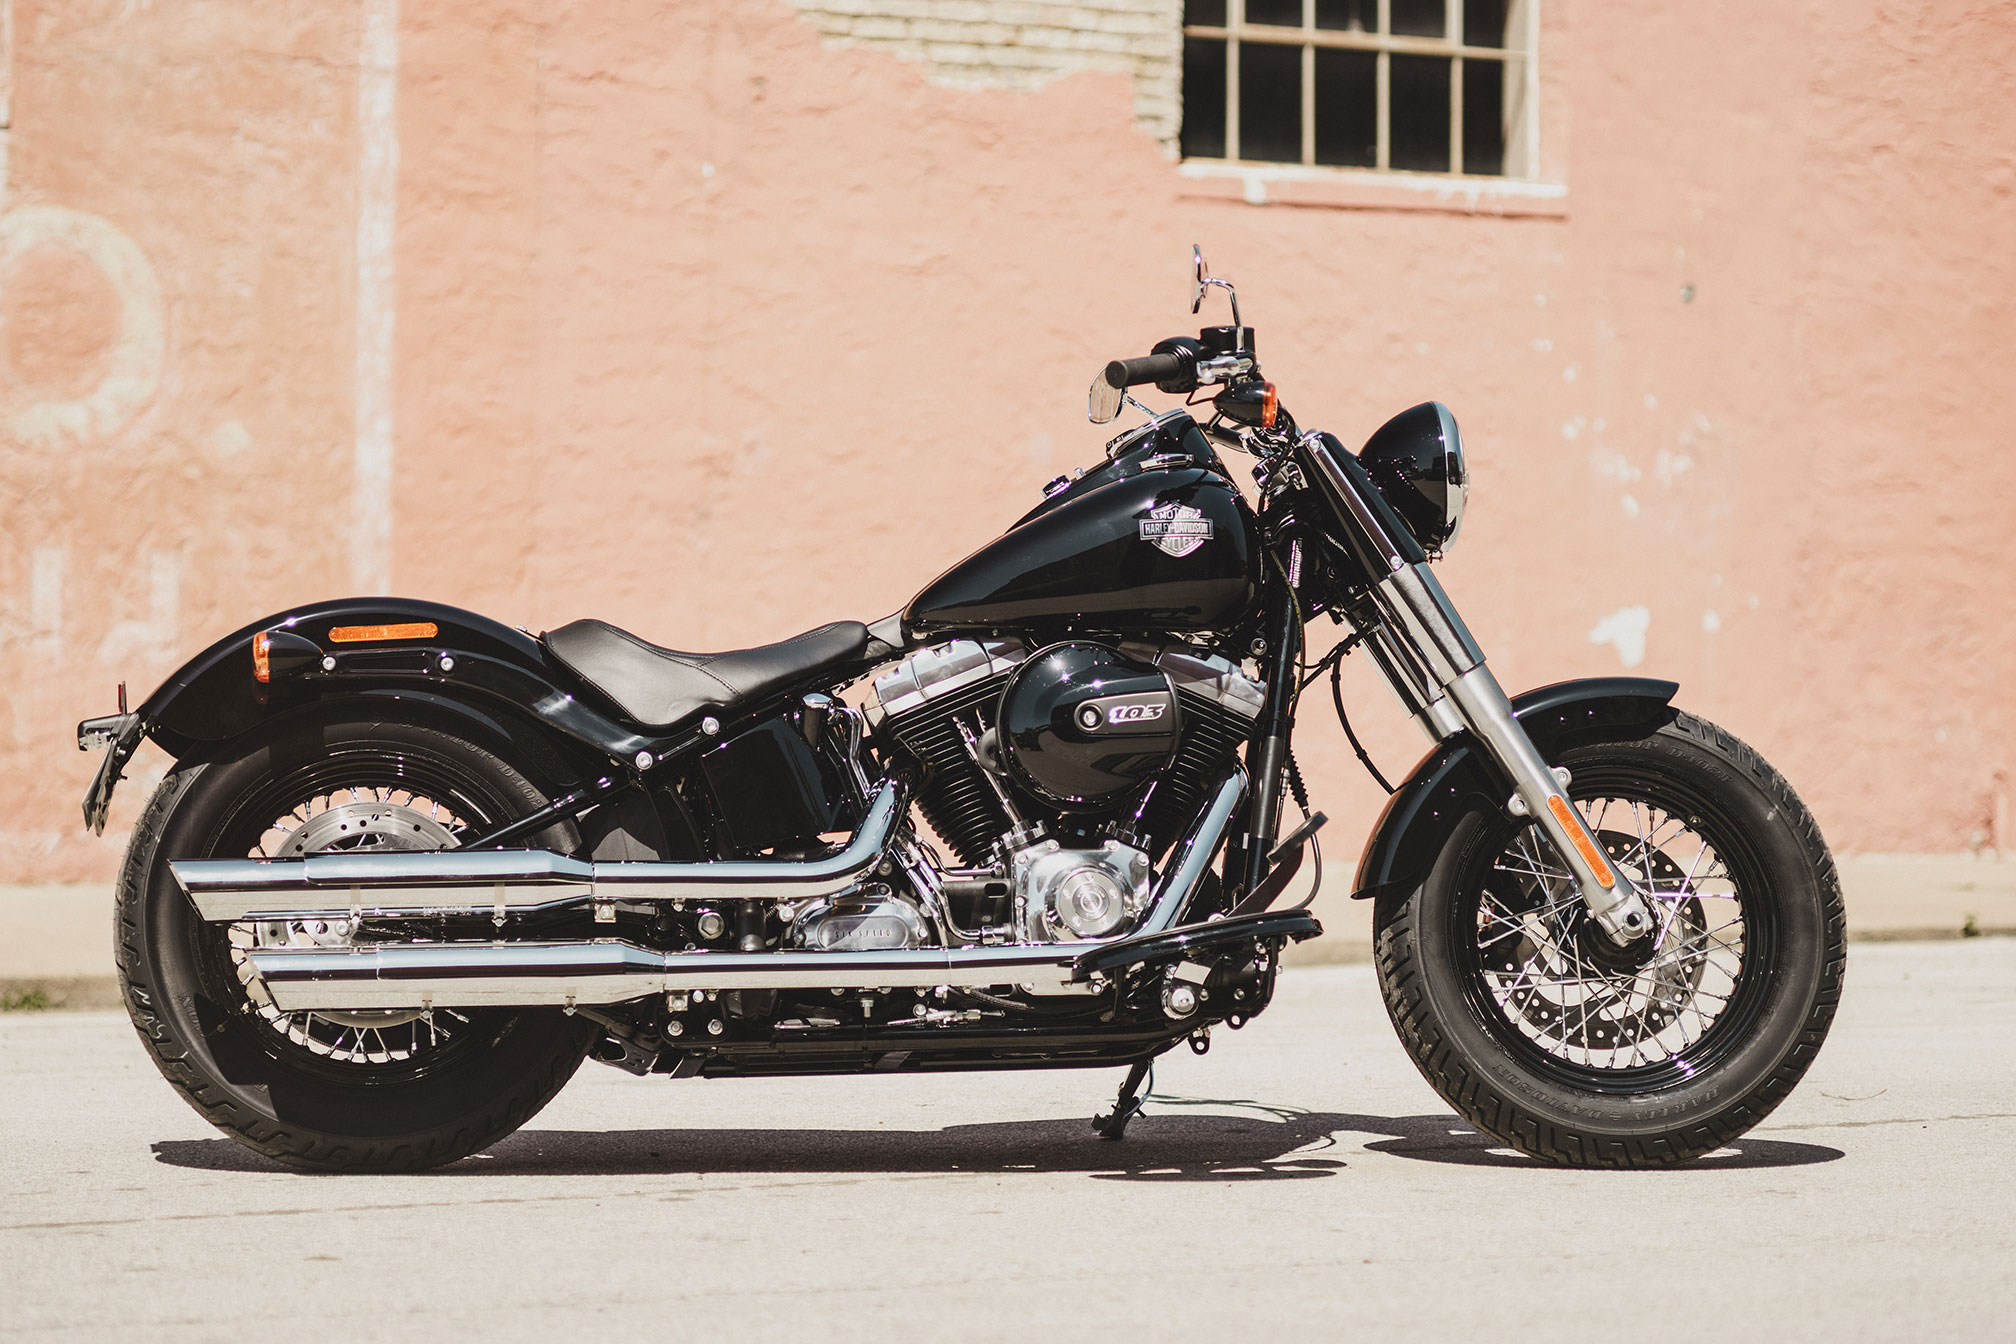 Harley-Davidson Softail Slim High Quality Background on Wallpapers Vista